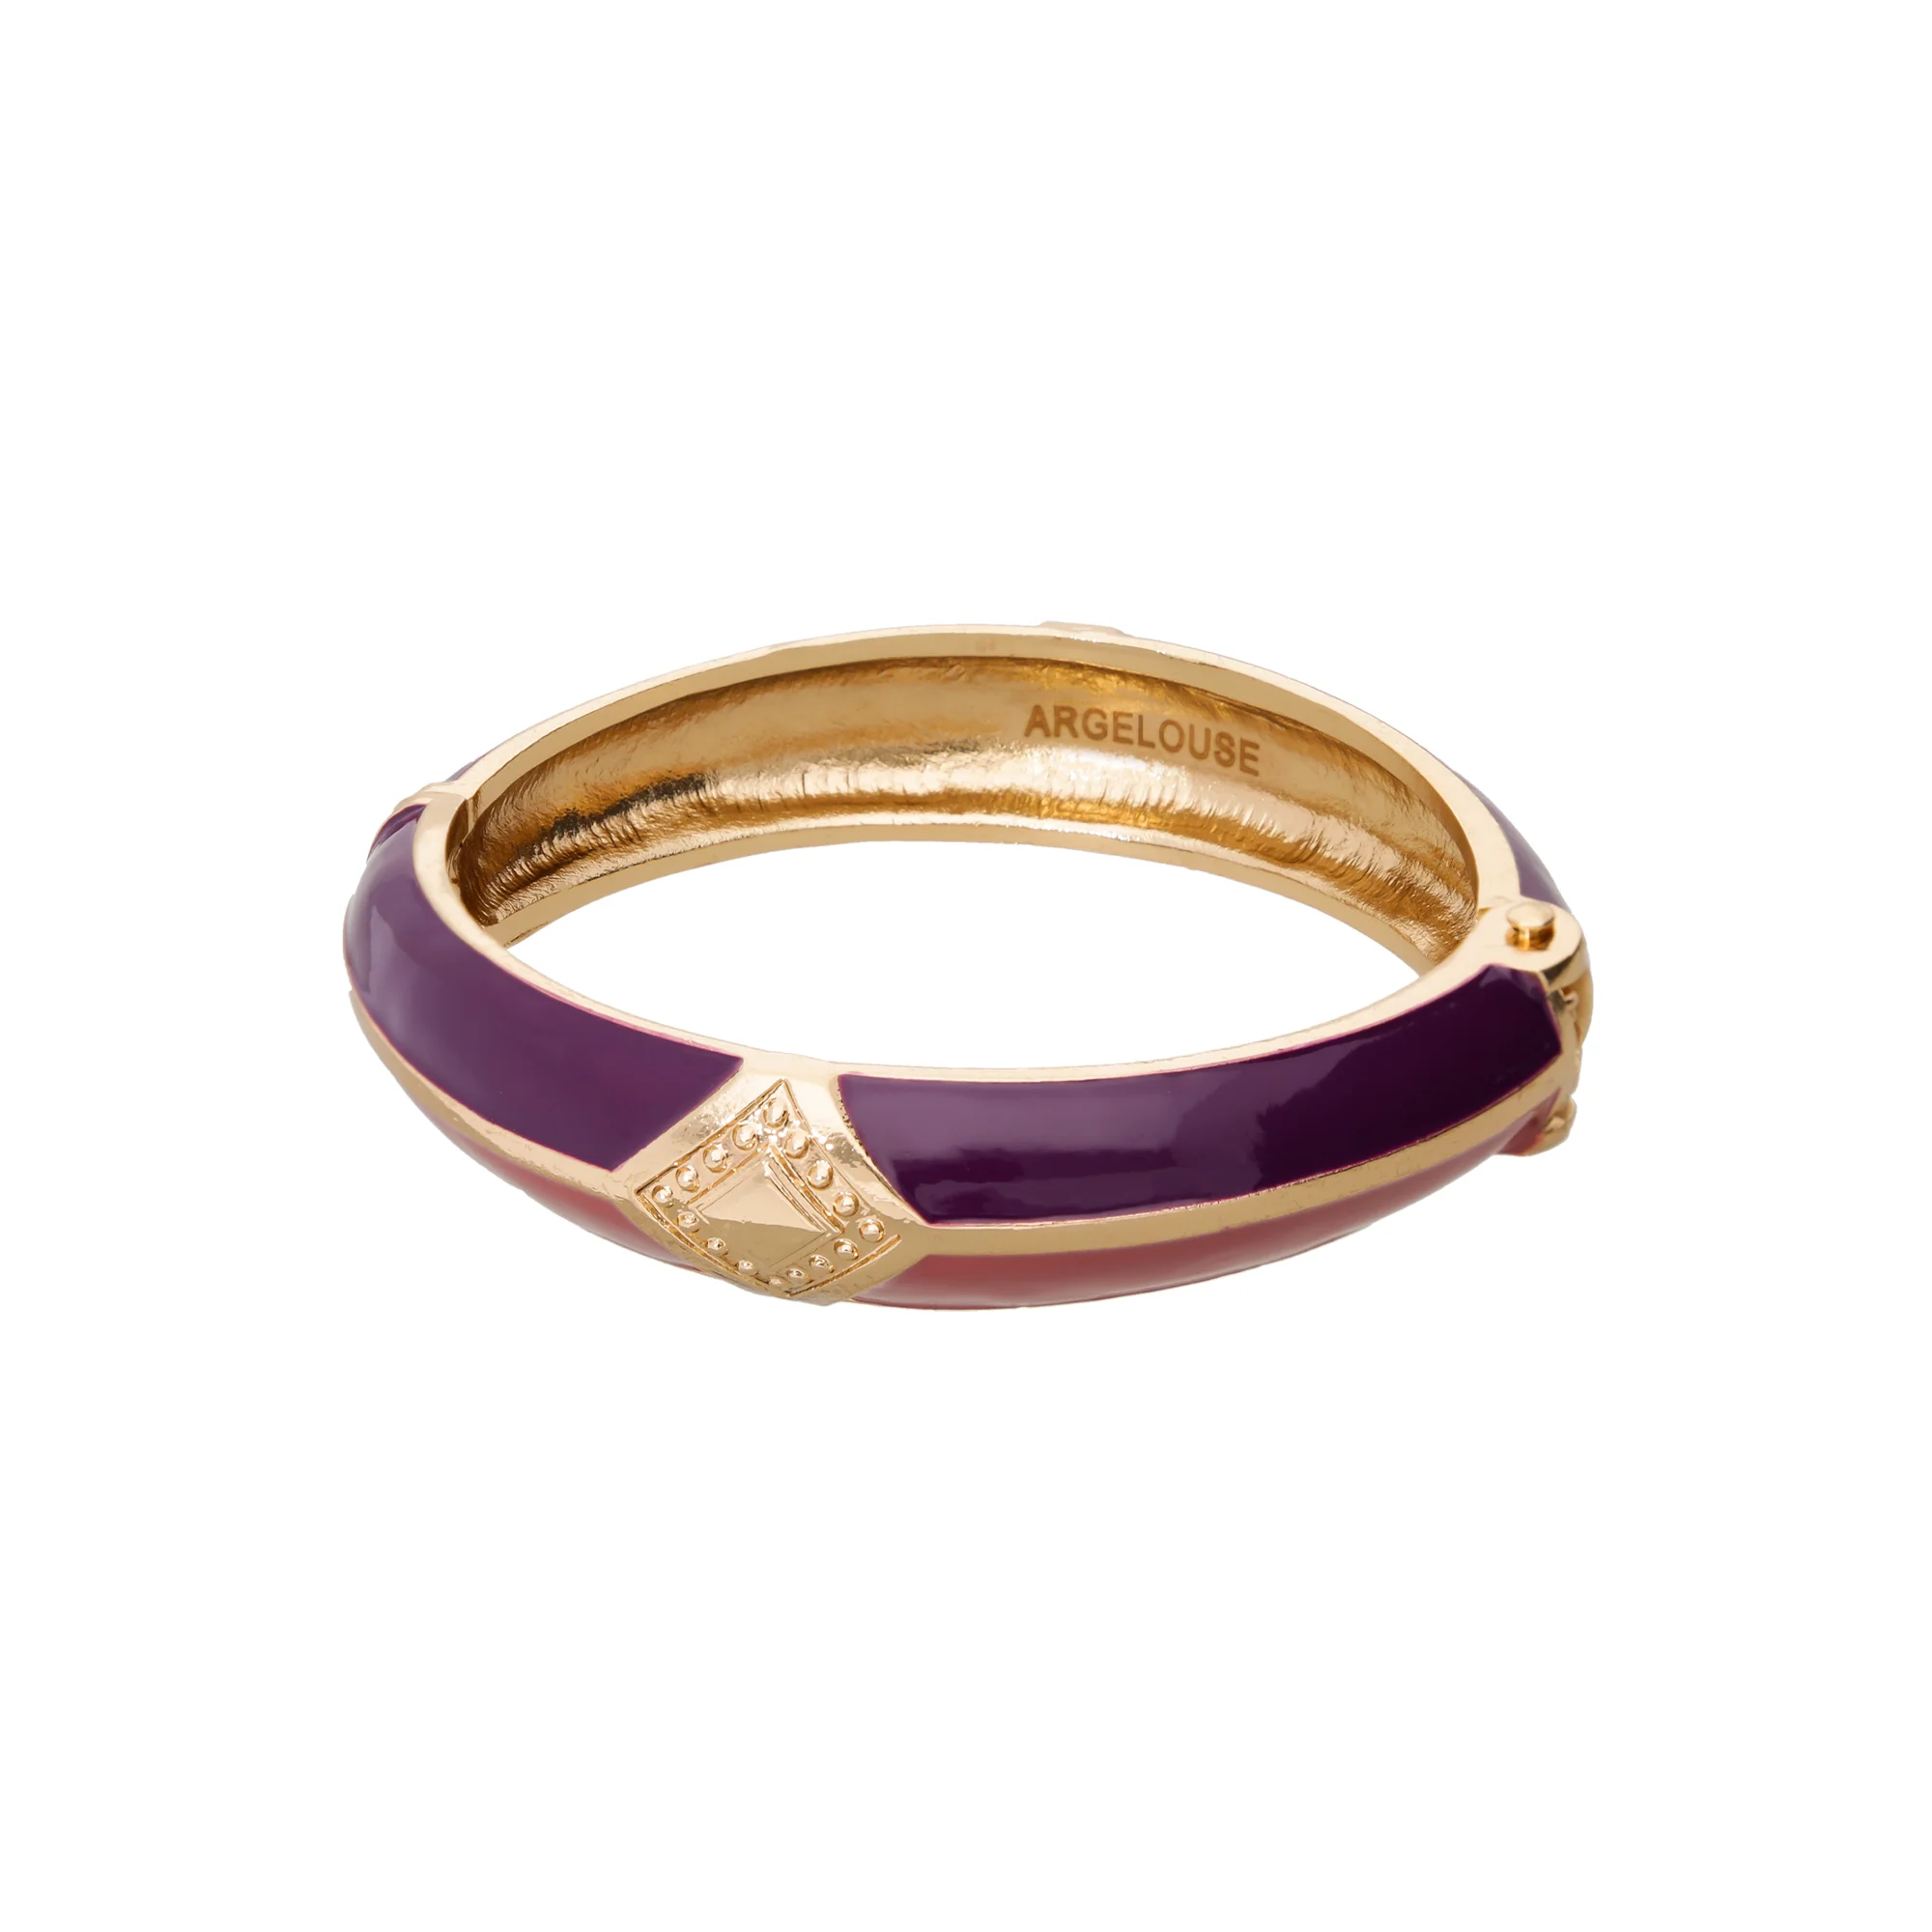 Argelouse bracelets 16